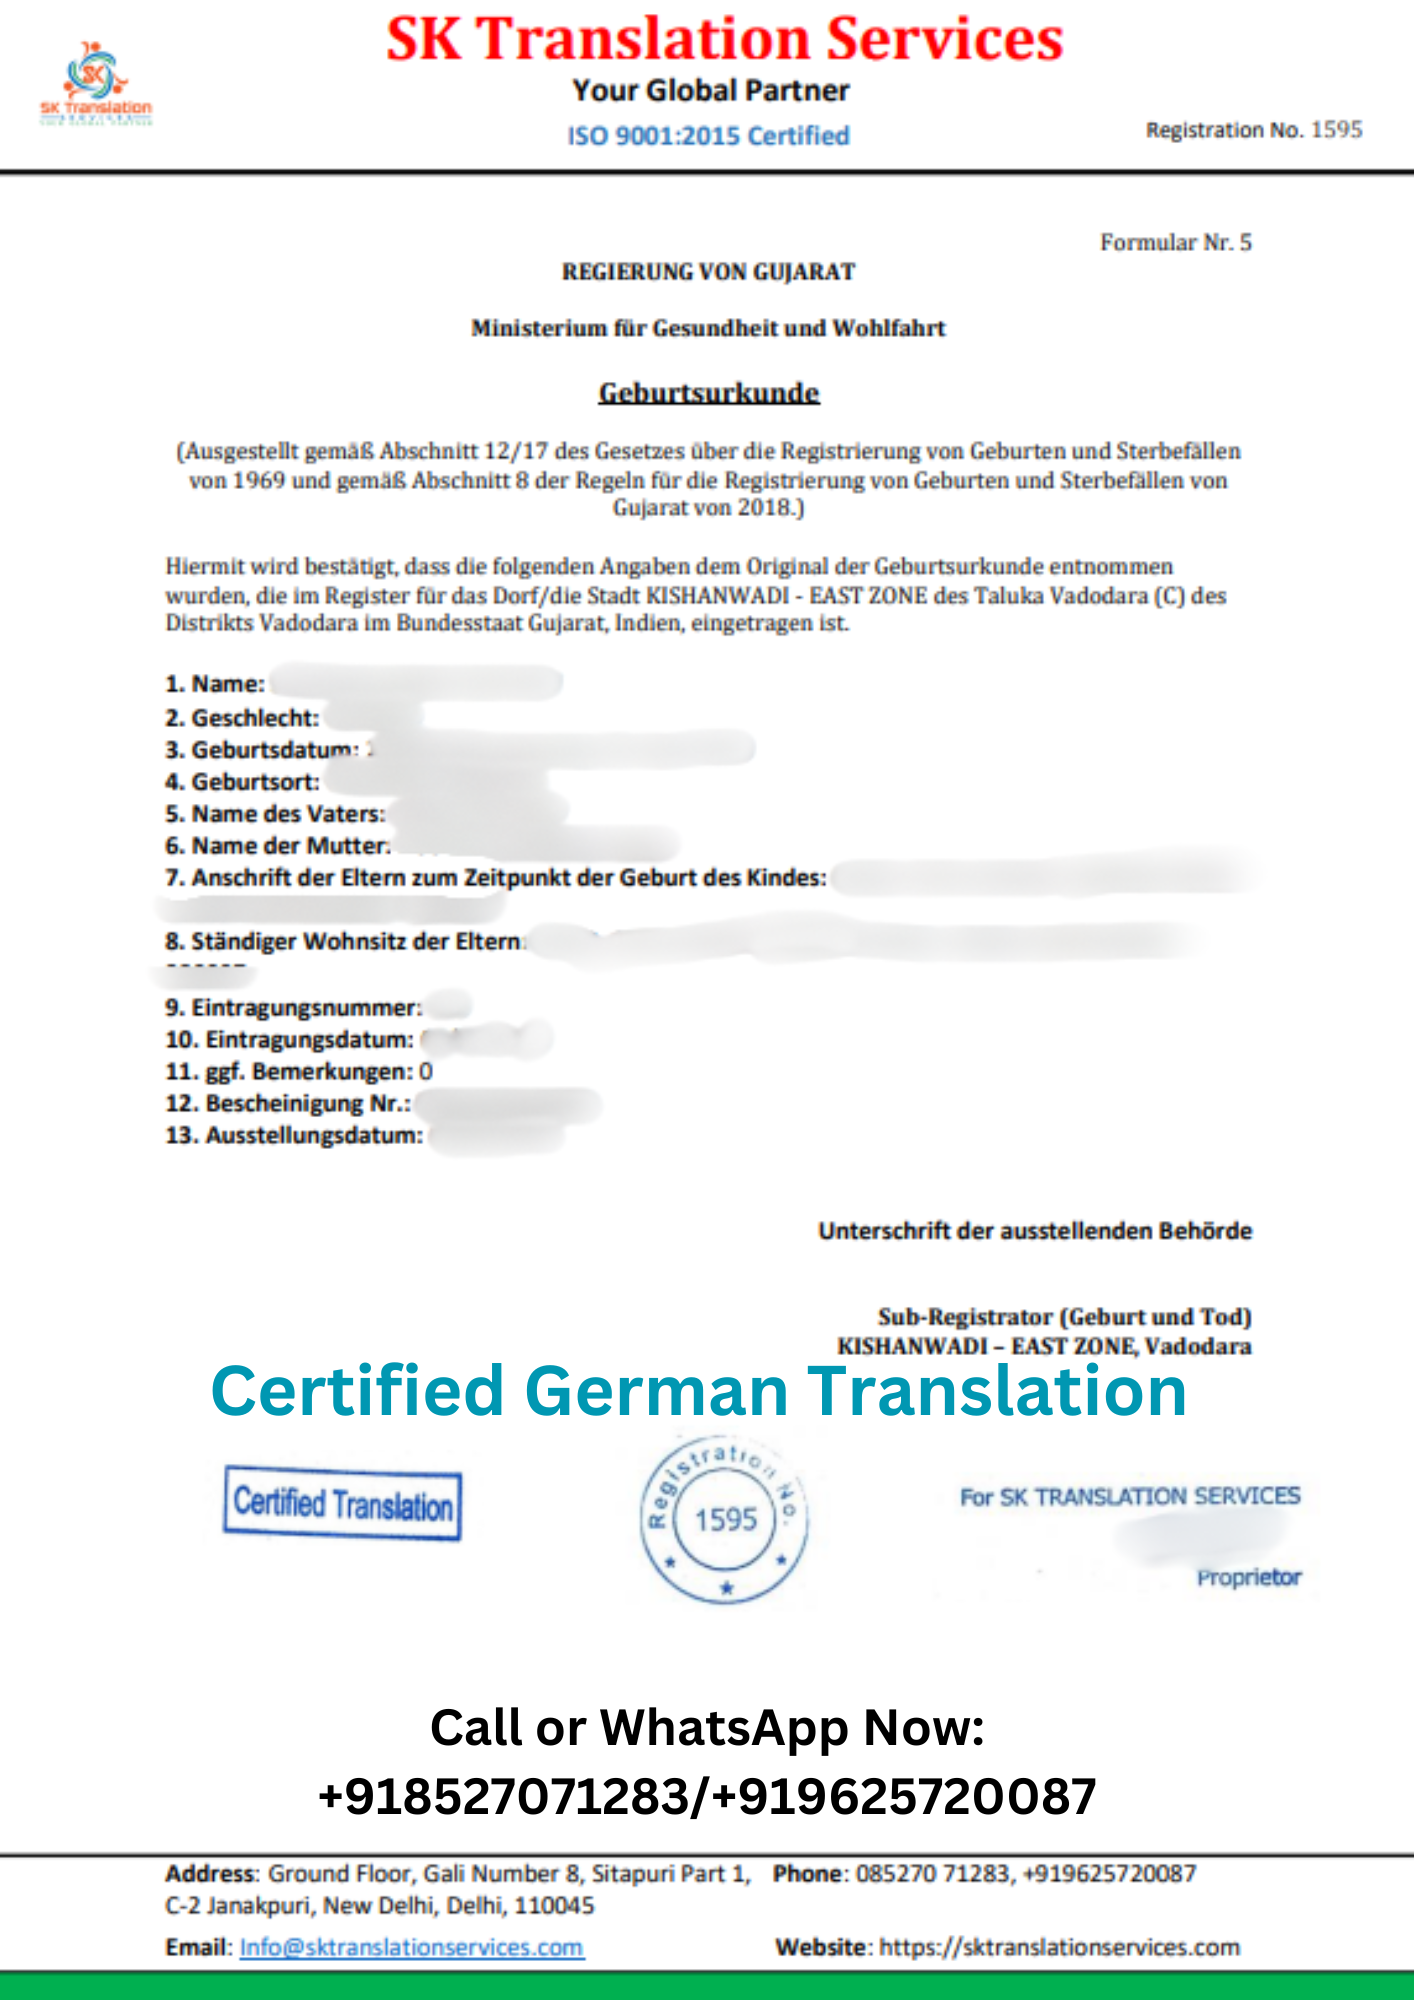 Certified German Translation